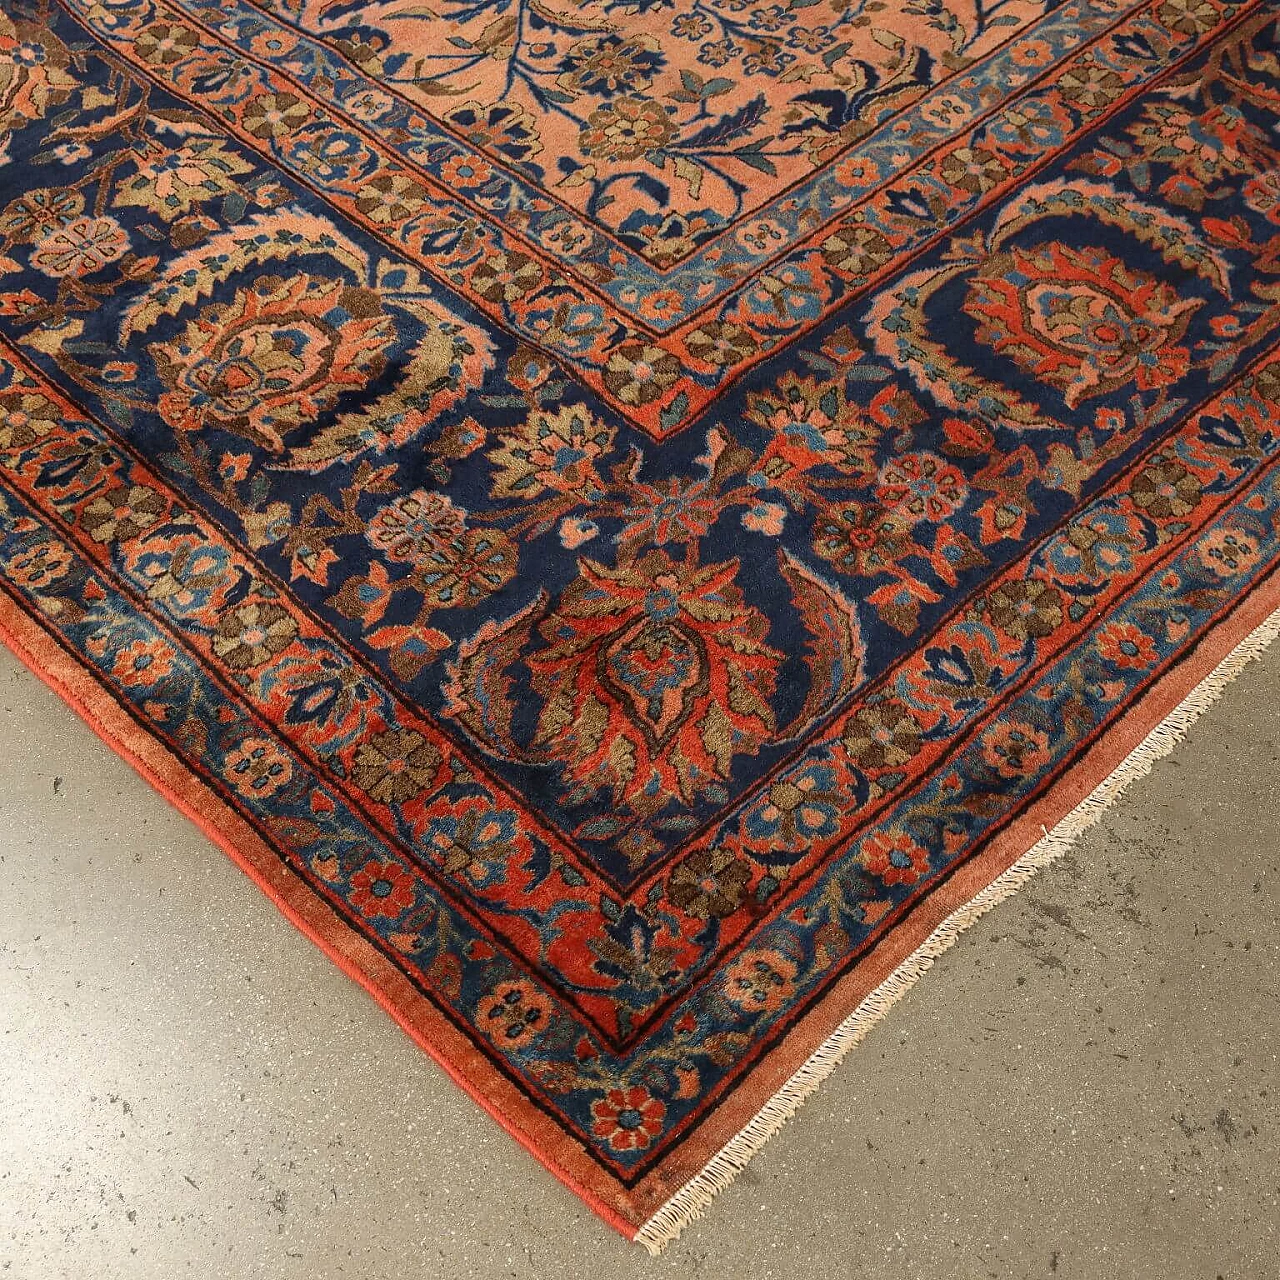 Iranian Keshan Manchester cotton and wool carpet 7